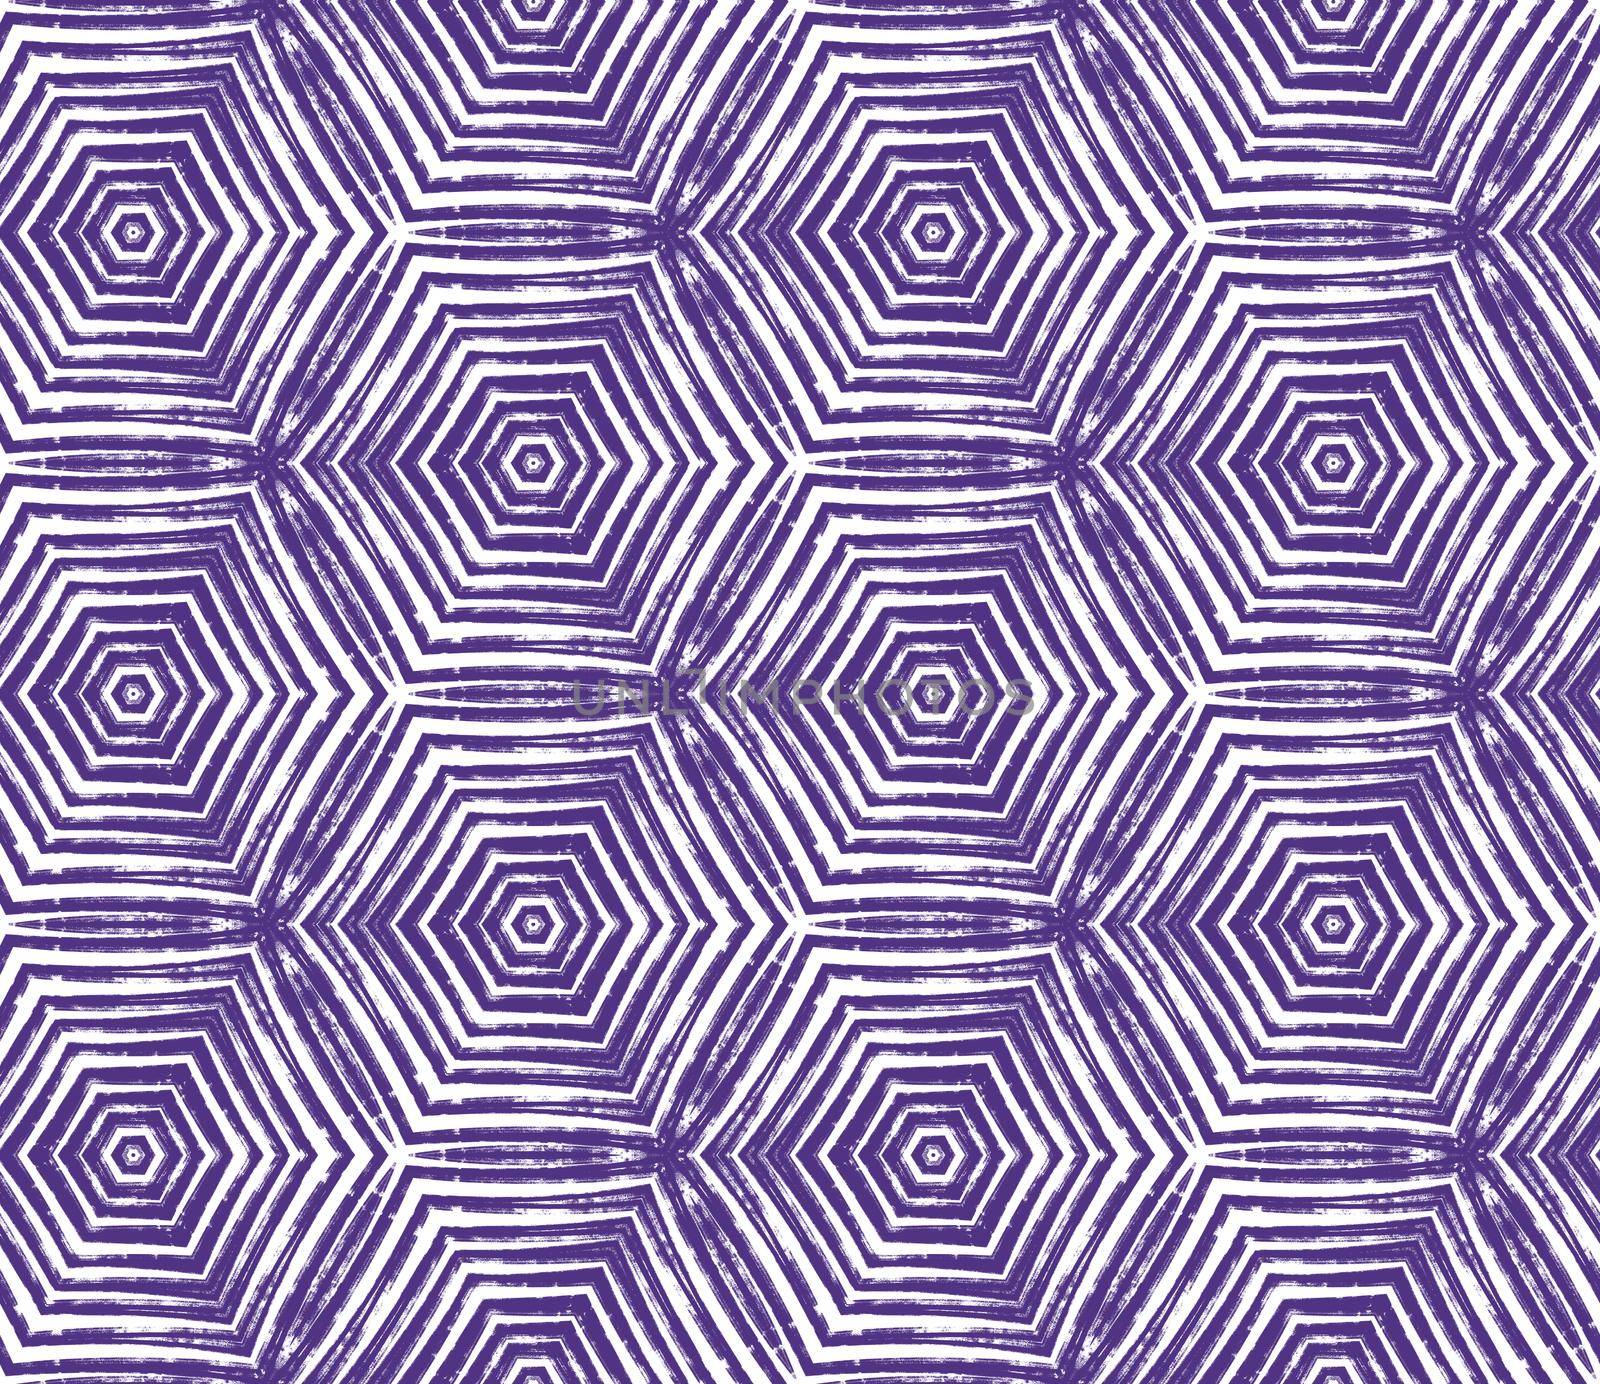 Arabesque hand drawn pattern. Purple symmetrical by beginagain